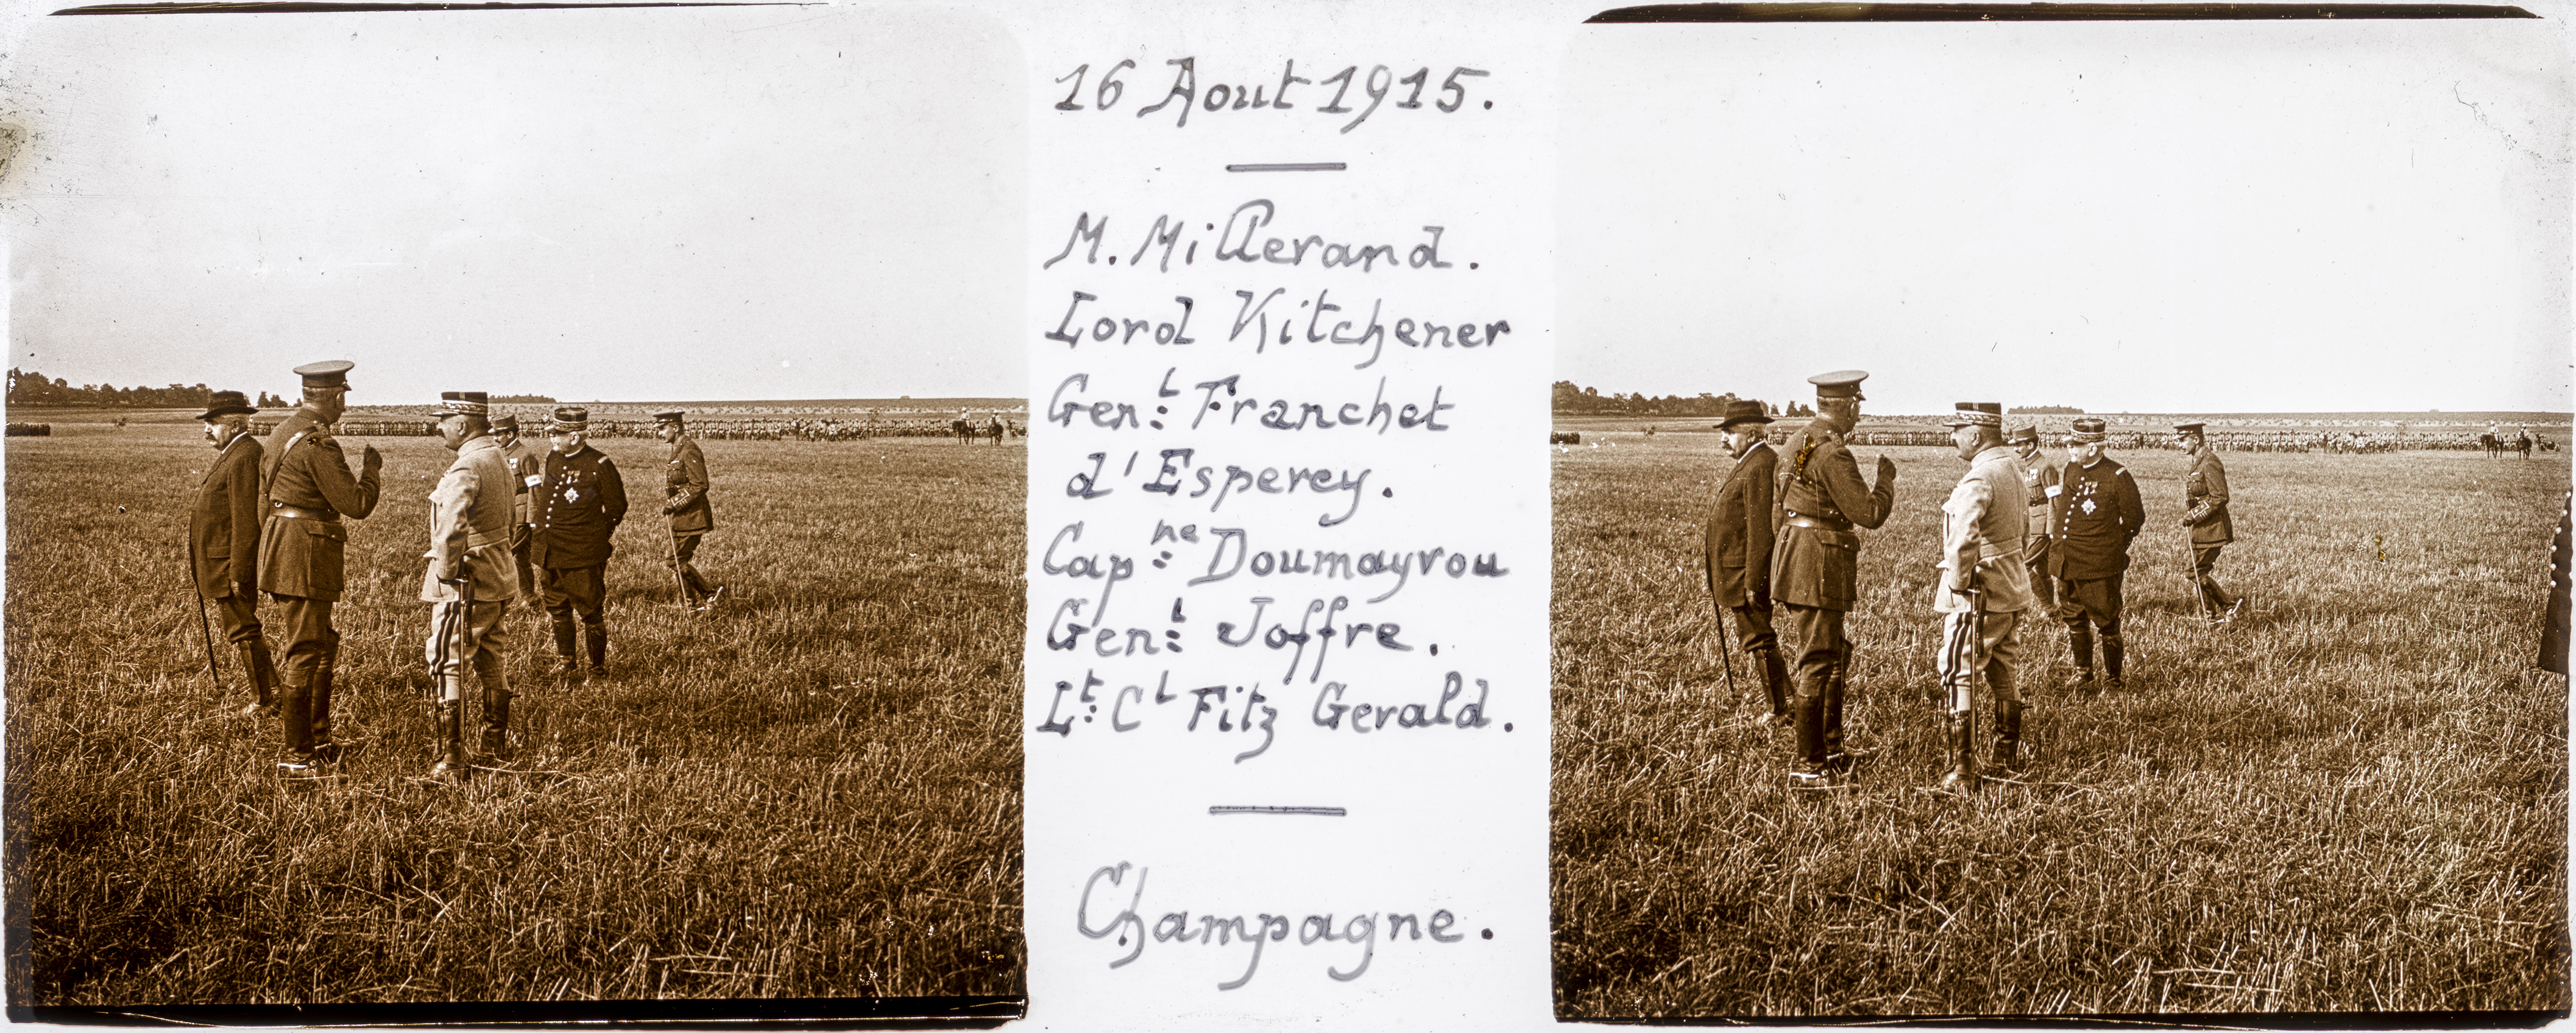 M.Millerand, Lord Kitchener, Général Franchet d'Esperey, Capn.Doumayrou, Général Joffre, Lt.Cl.Fitzgerald 